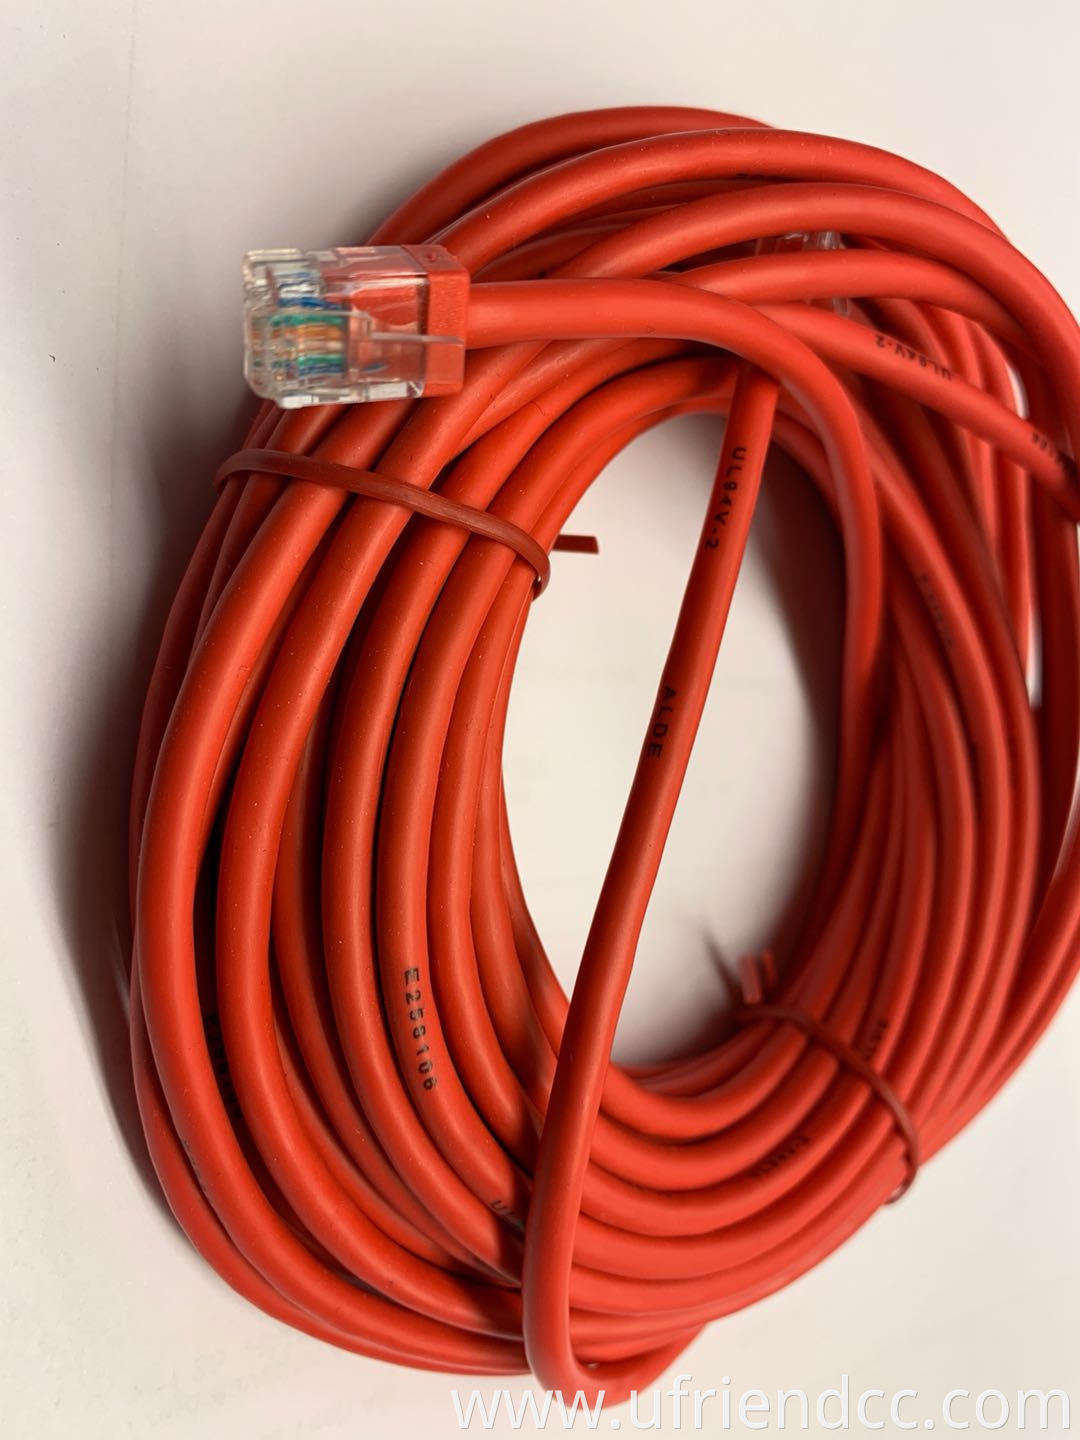 rj11 telephone cable RJ11/RJ12 6P6C Crimp Plugs Modular Connectors Broadband/ADSL/Telephone